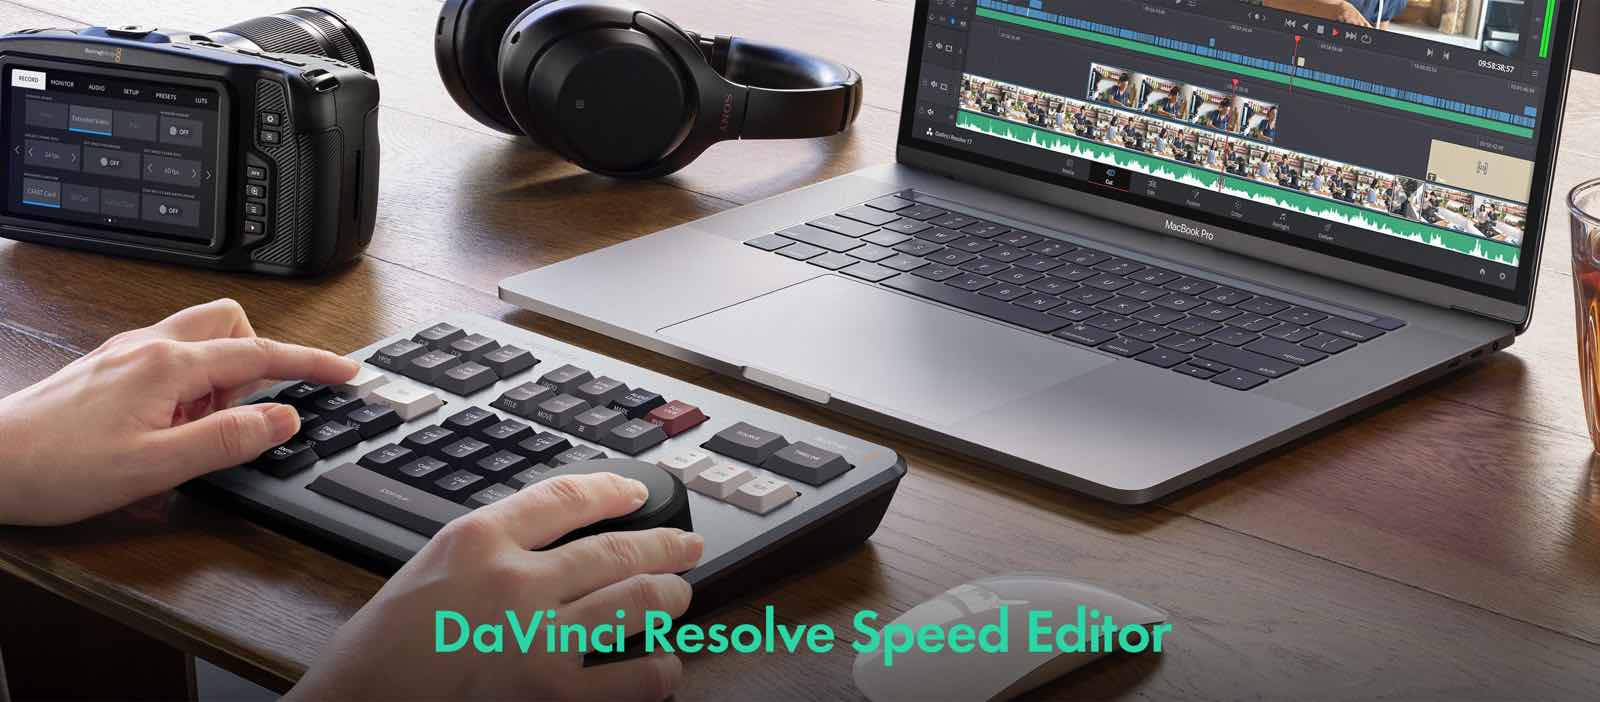 DaVinci Resolve 18.5.0.41 download the last version for windows